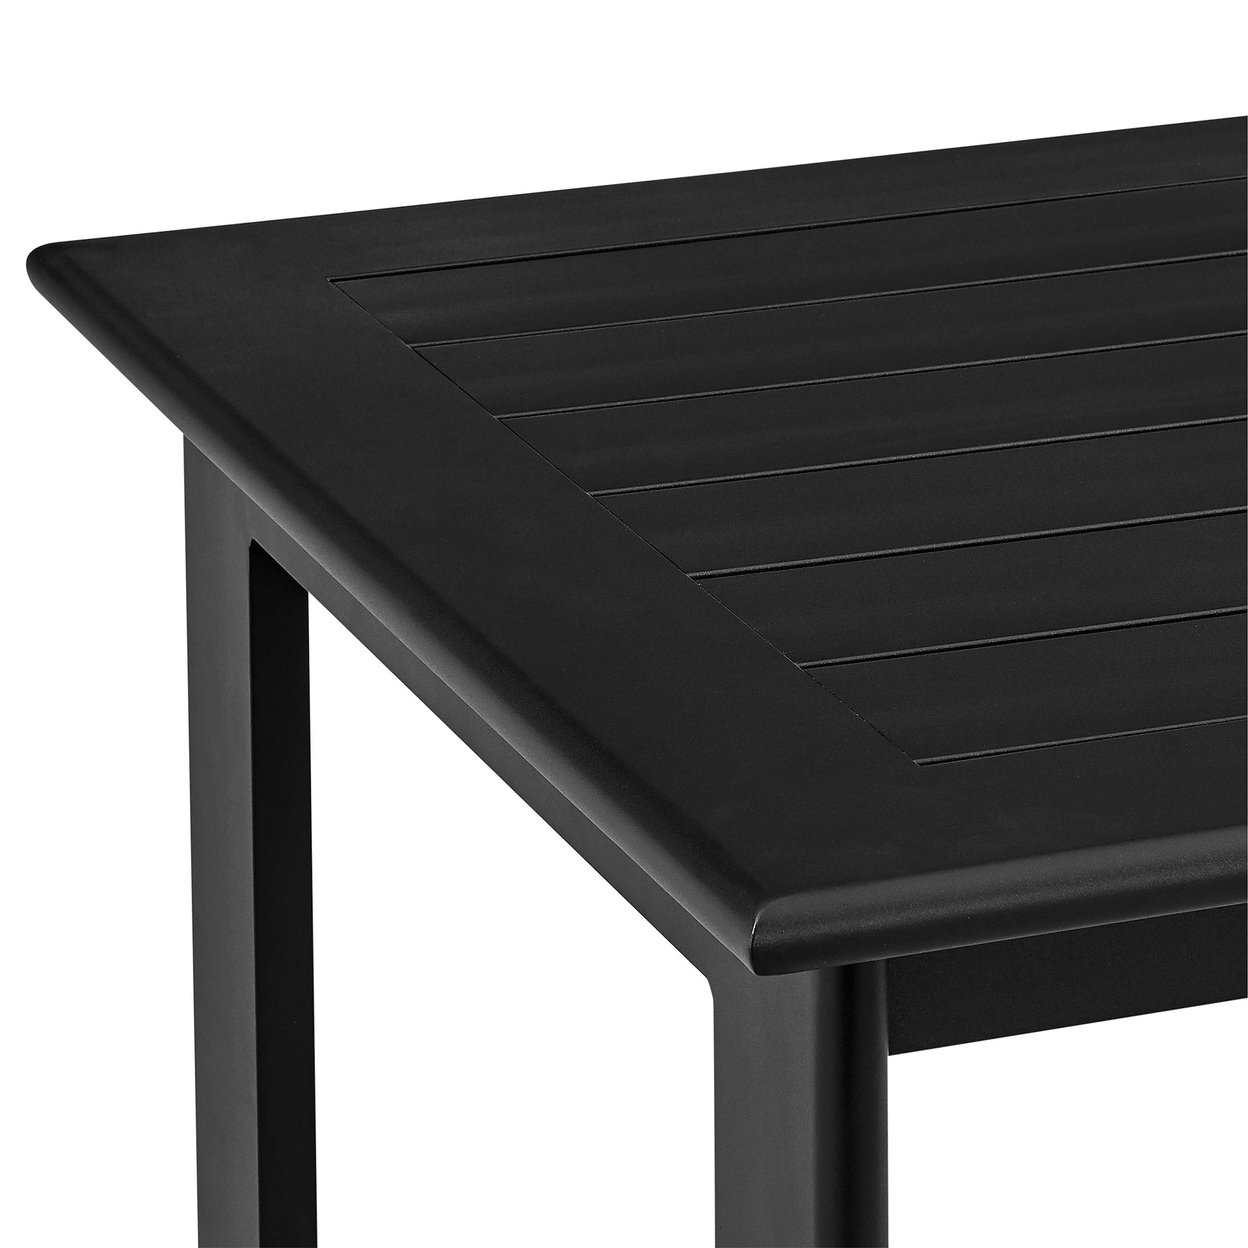 Ollie 59 Inch Patio Bar Height Dining Table, Rectangular Tabletop, Black- Saltoro Sherpi